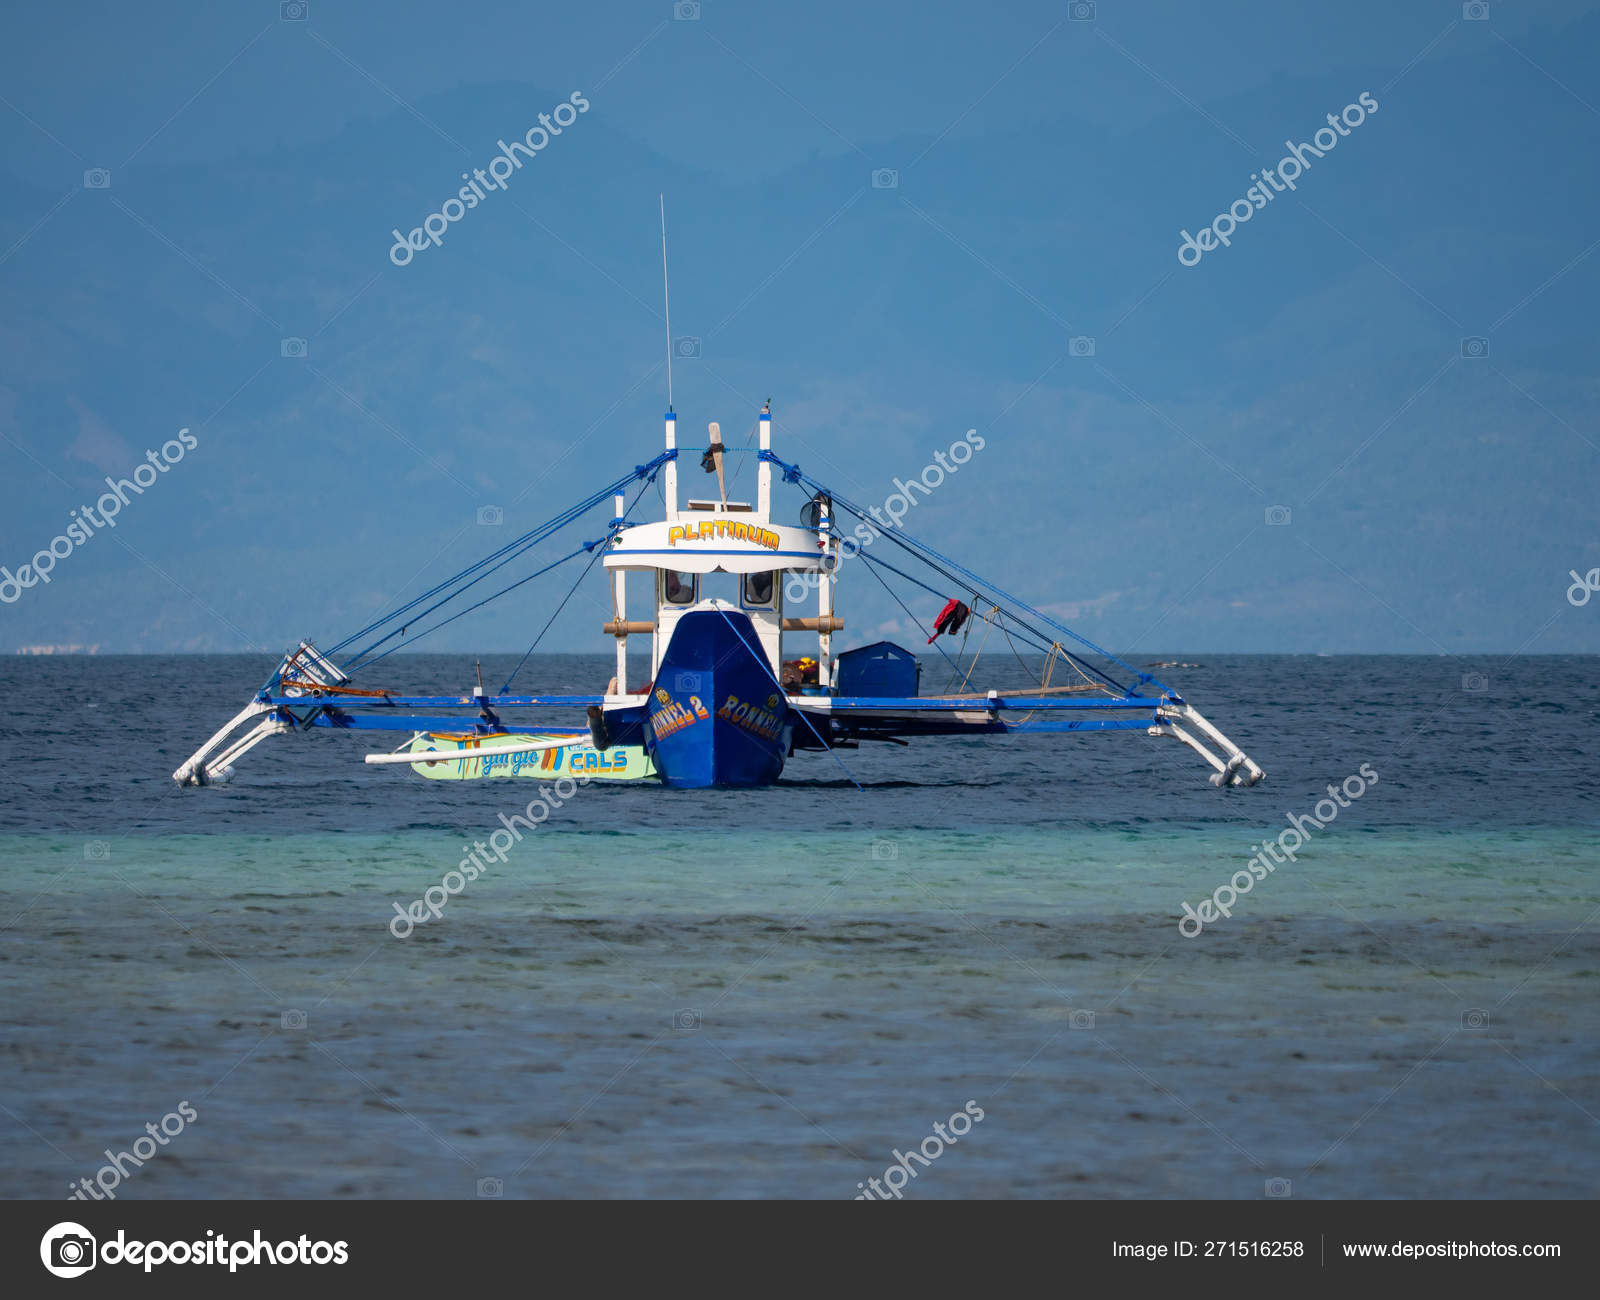 https://st4.depositphotos.com/1397350/27151/i/1600/depositphotos_271516258-stock-photo-outrigger-fishing-boat-in-the.jpg